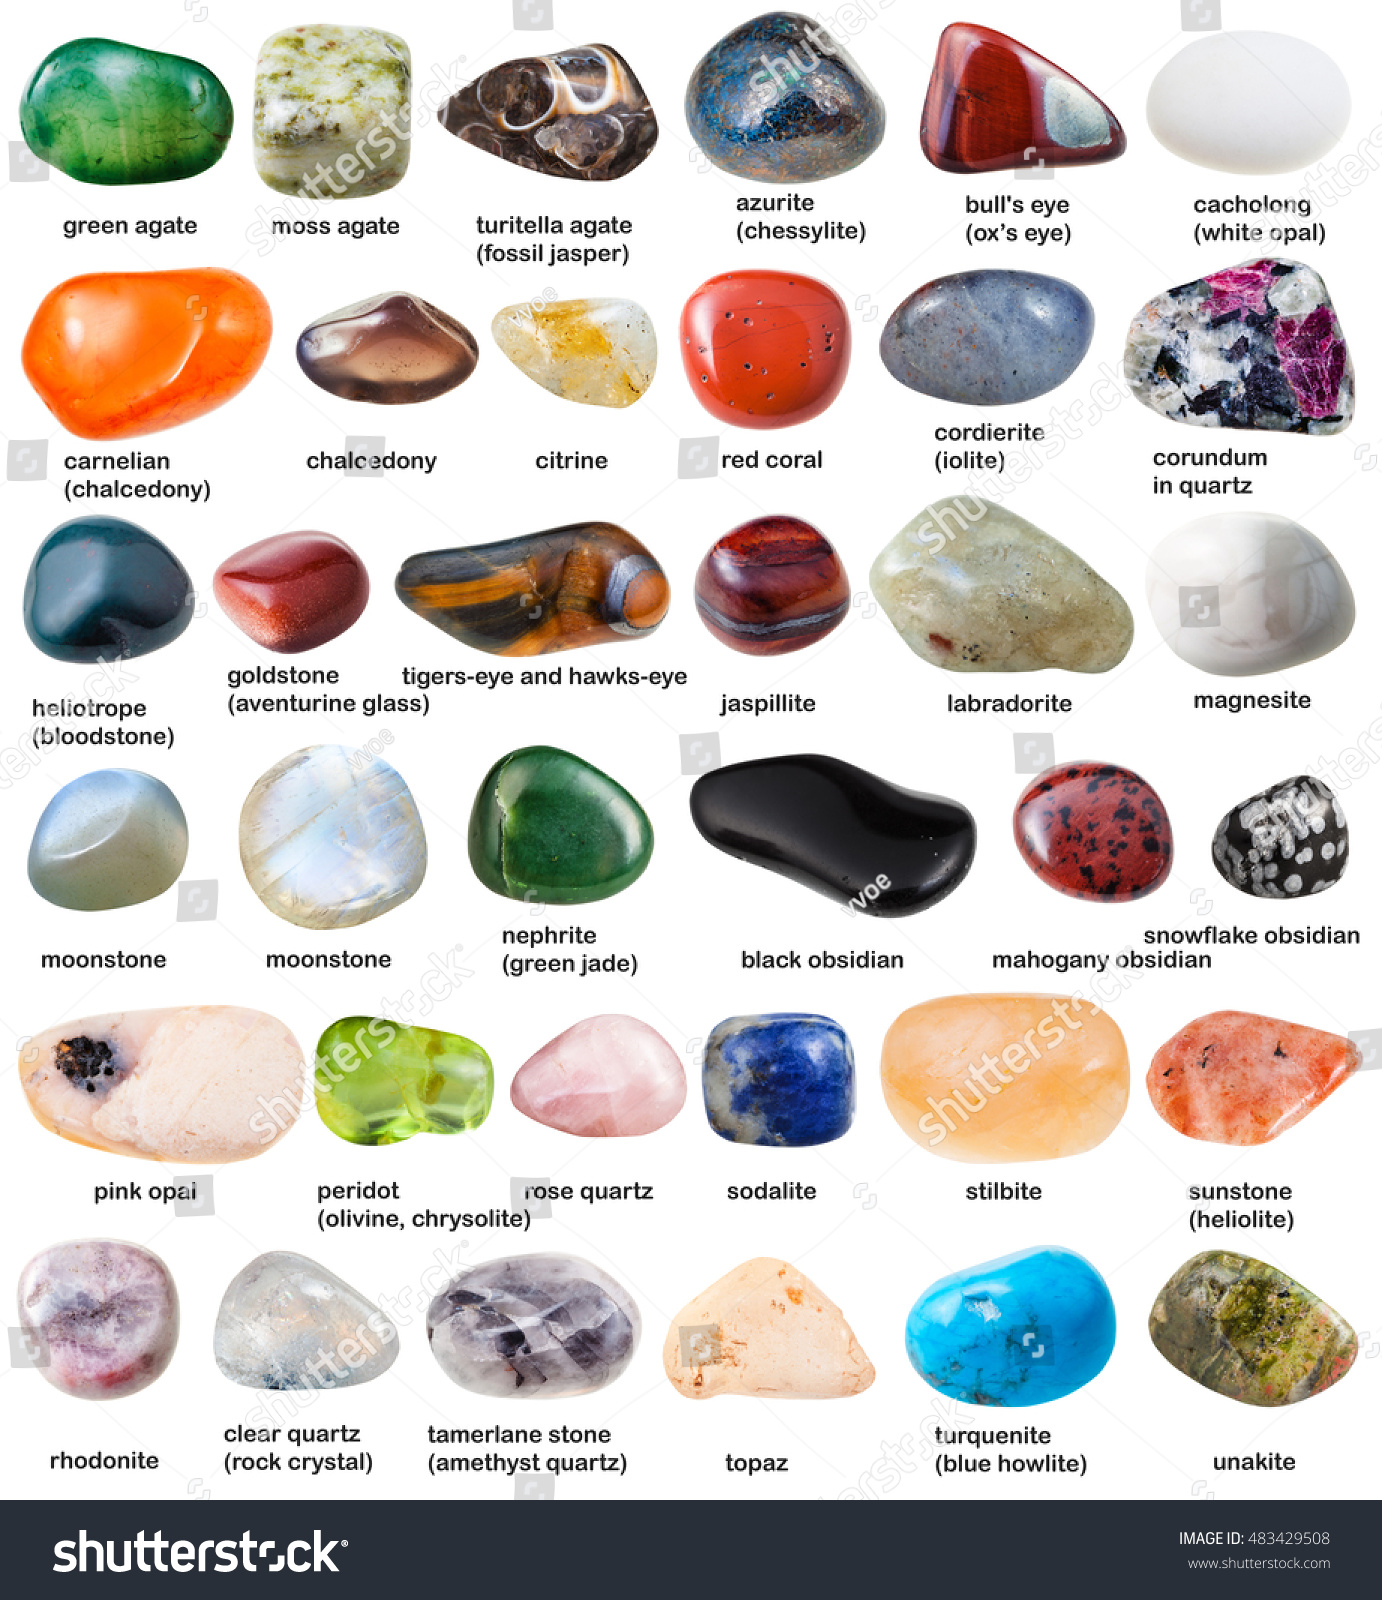 5,581 Opal quartz Images, Stock Photos & Vectors | Shutterstock